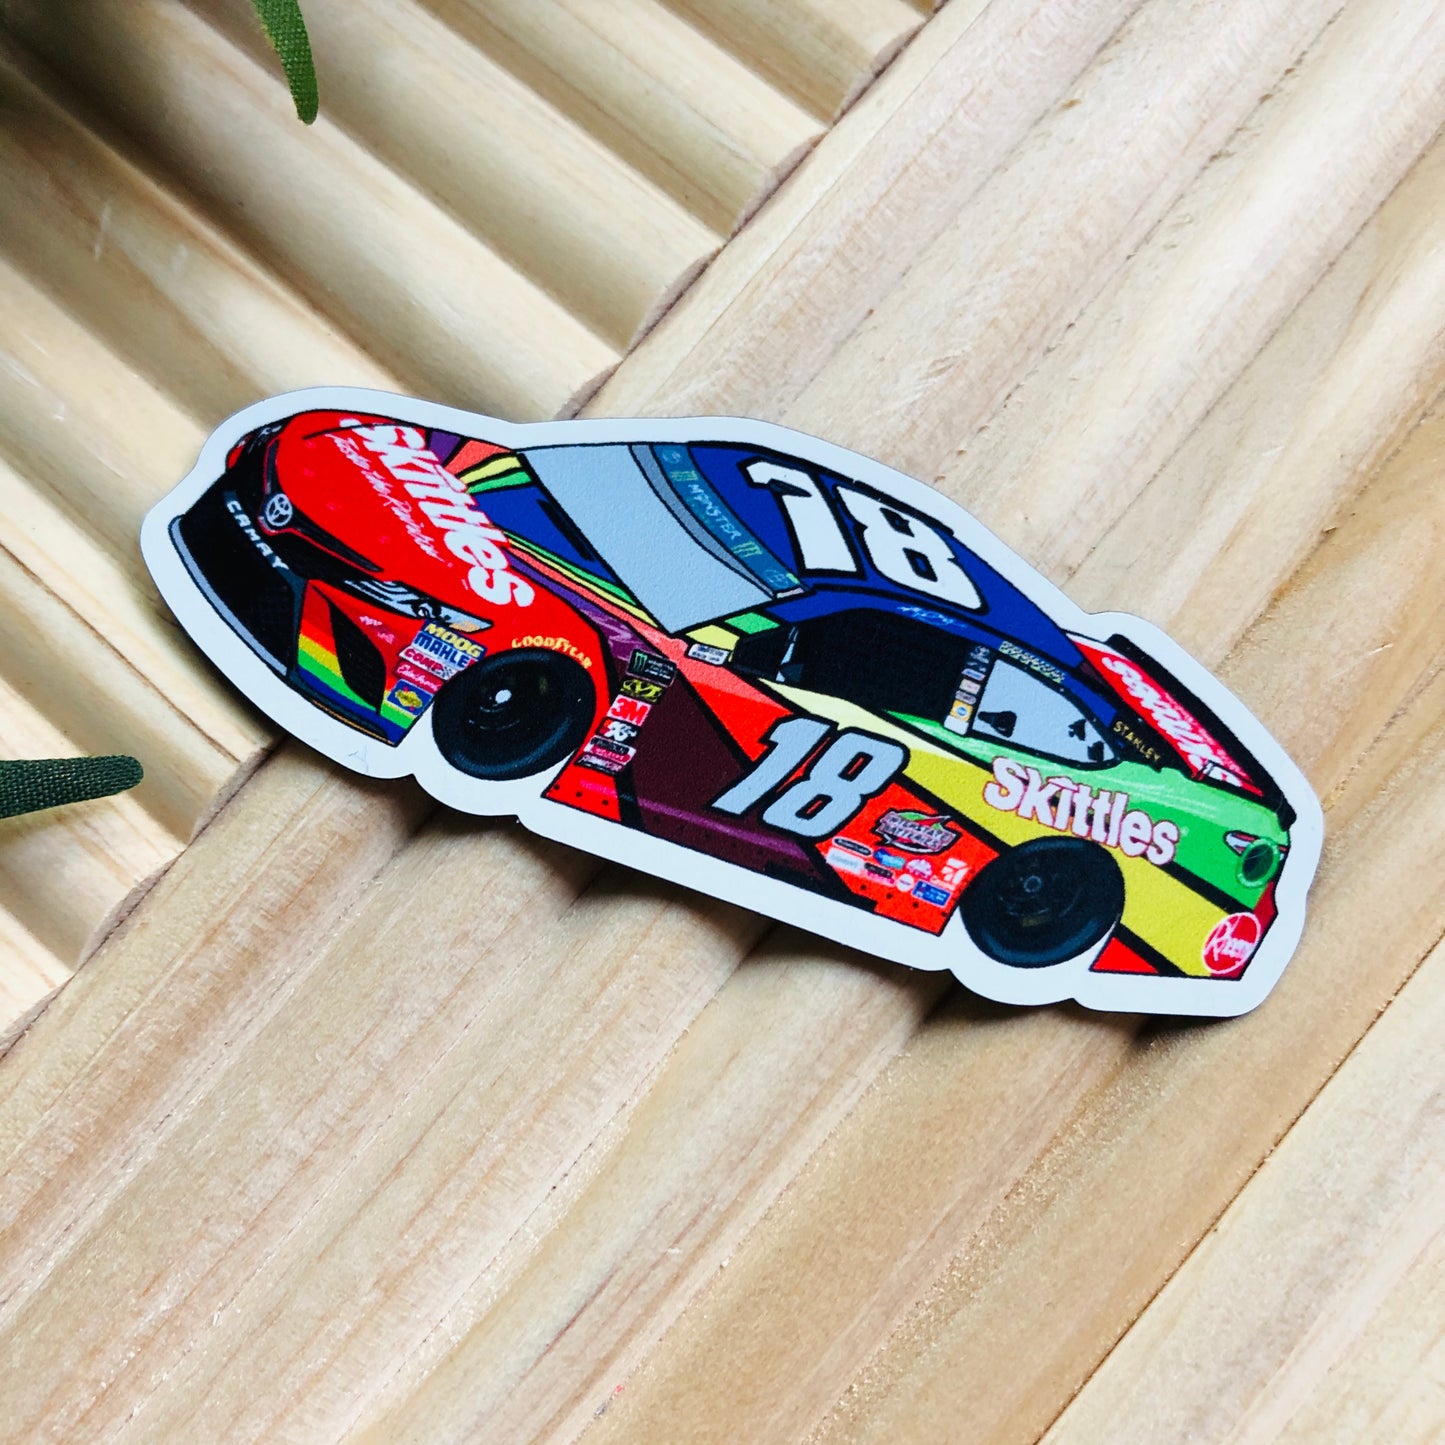 Kyle Busch NASCAR Cup Driver #18 Skittles Darlington Throwback Car Magnet